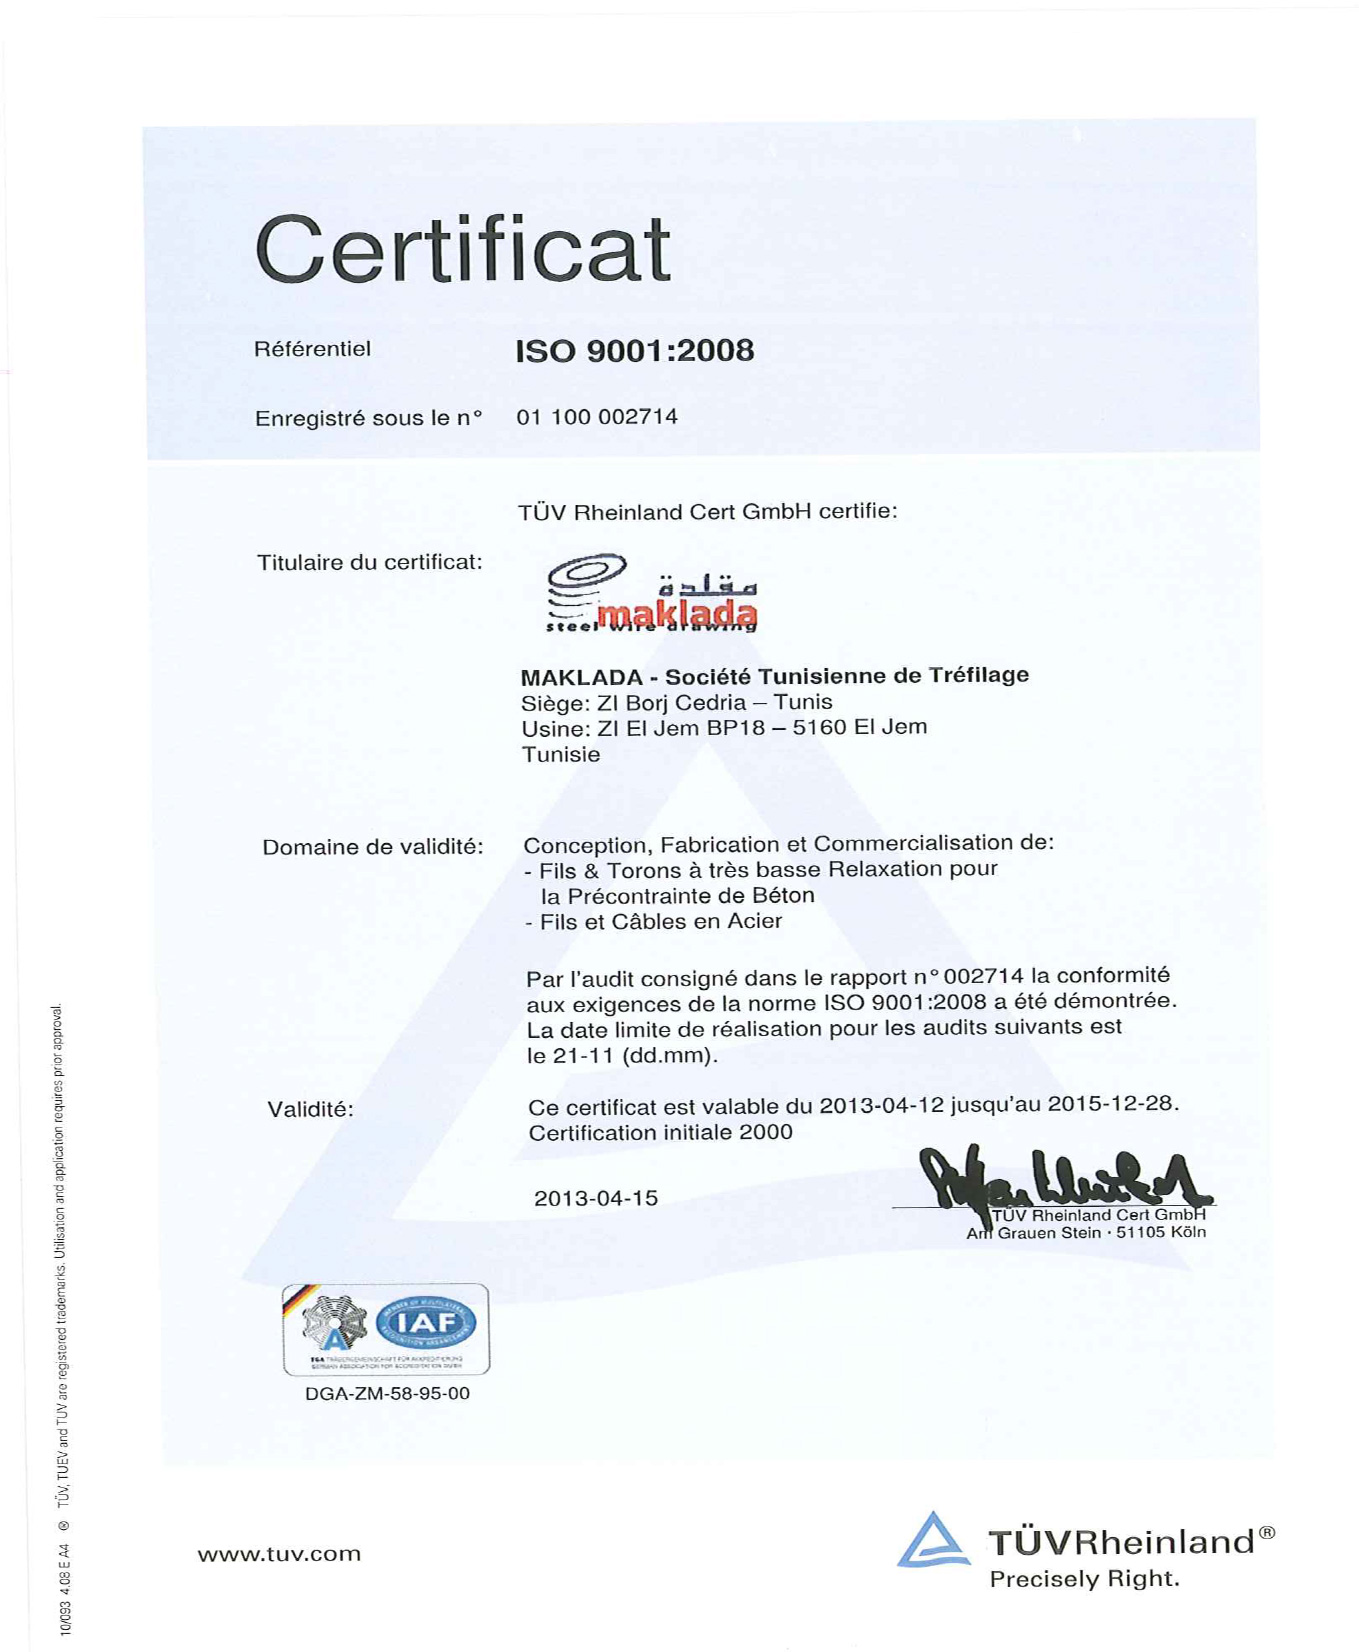 certificat Maklada A4 copie.jpg